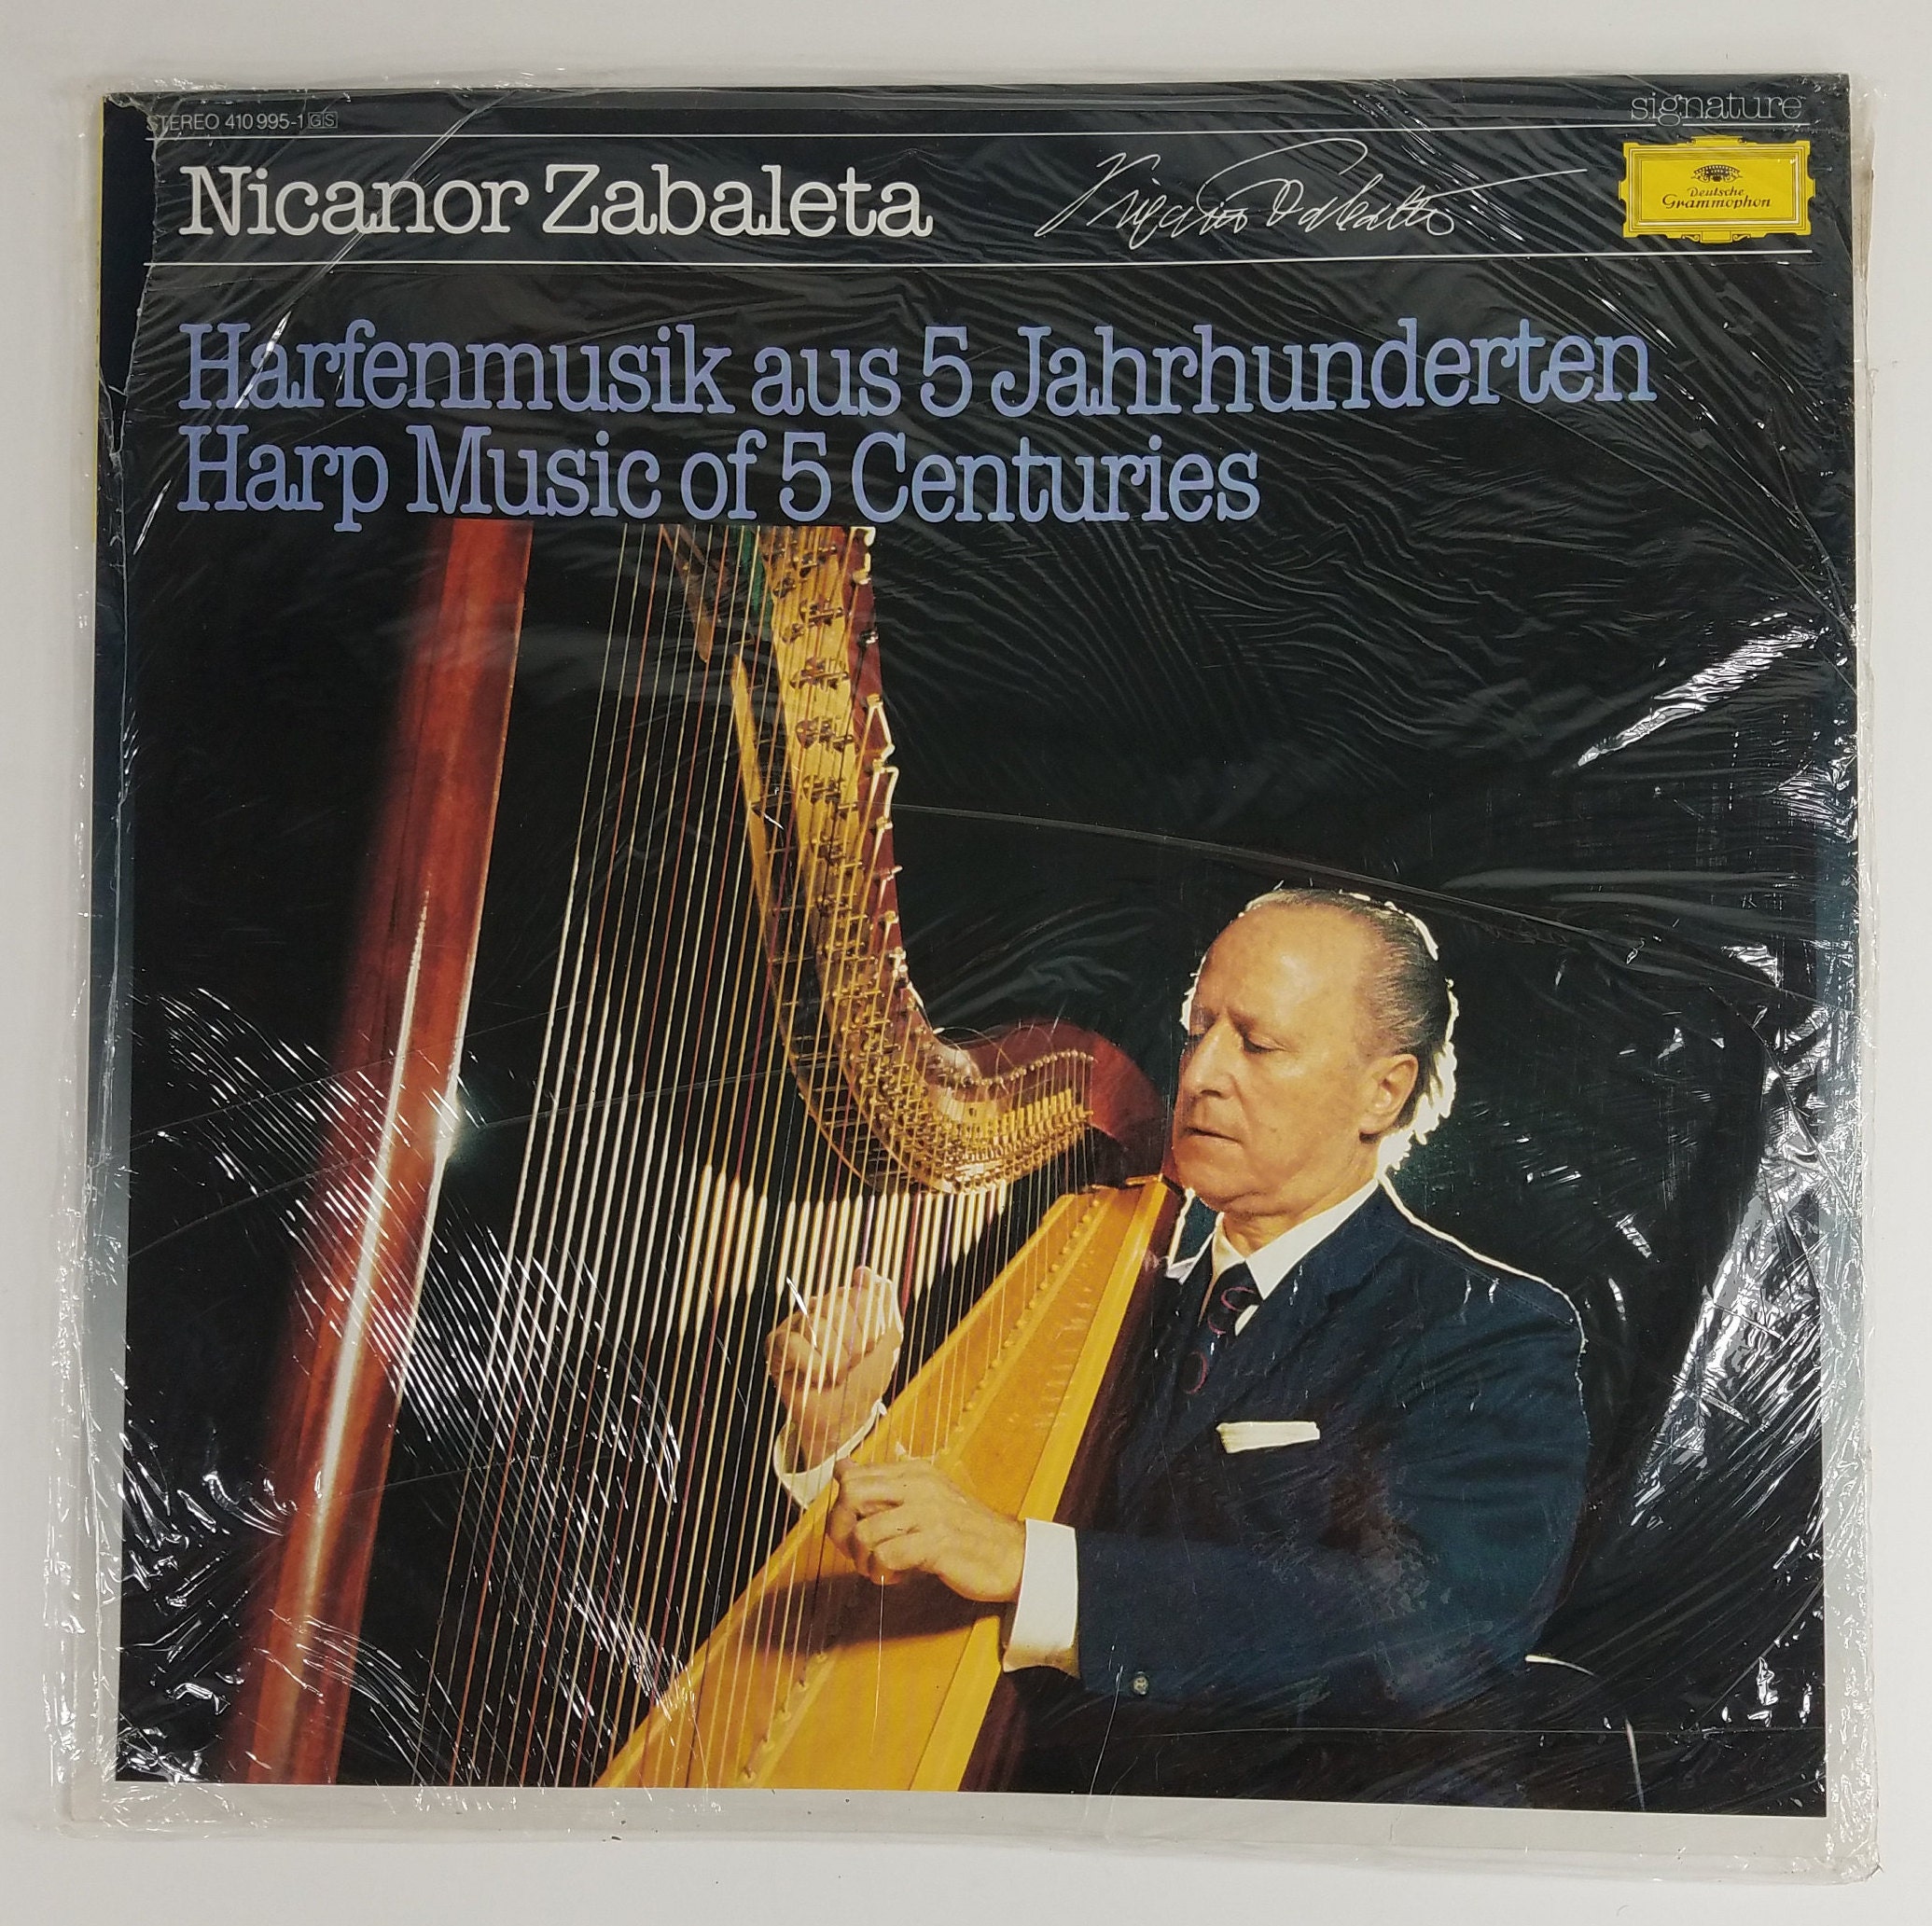 Buy NIP Nicanor Zabaleta Harp Music of 5 Centuries Vinyl Record Deutsche  Grammophon Sealed 1984 Online in India 